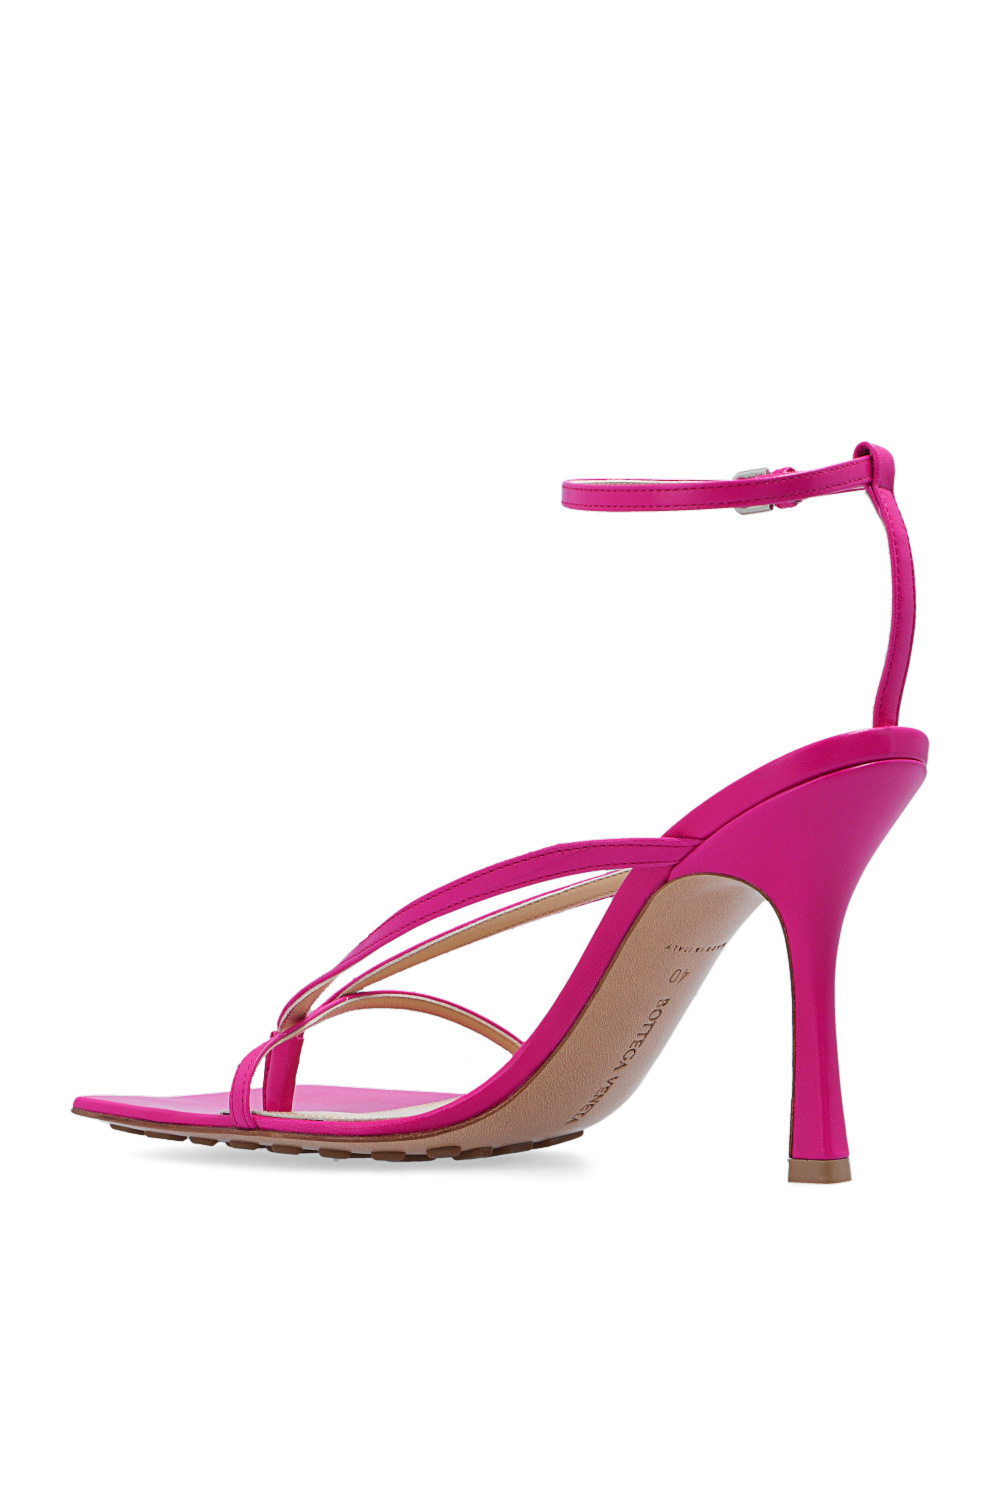 bottega jodie Veneta ‘Stretch’ heeled sandals